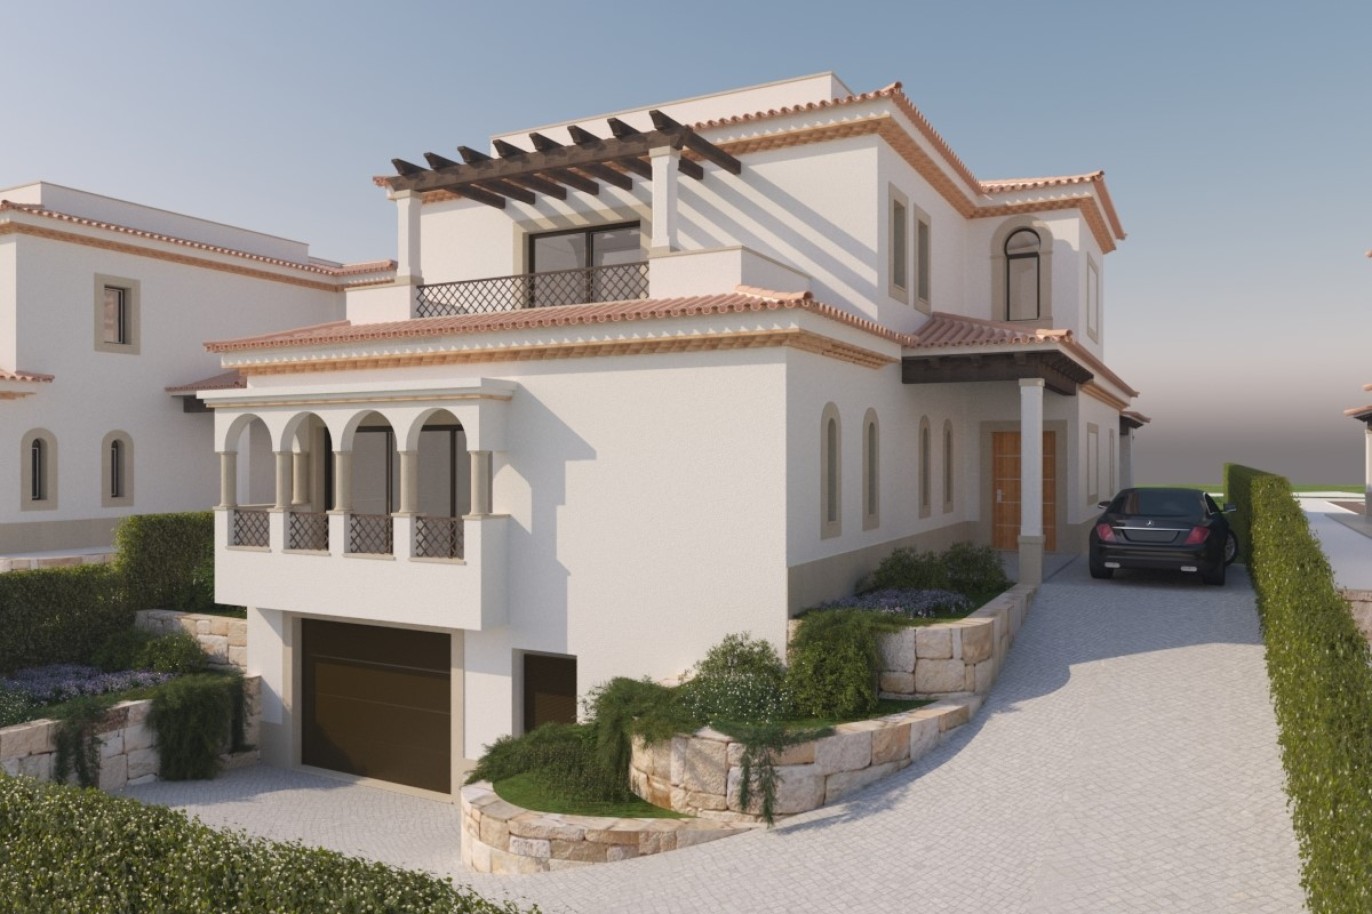 4 Bedroom Luxury Villa with pool for sale in Albufeira, Algarve_227982